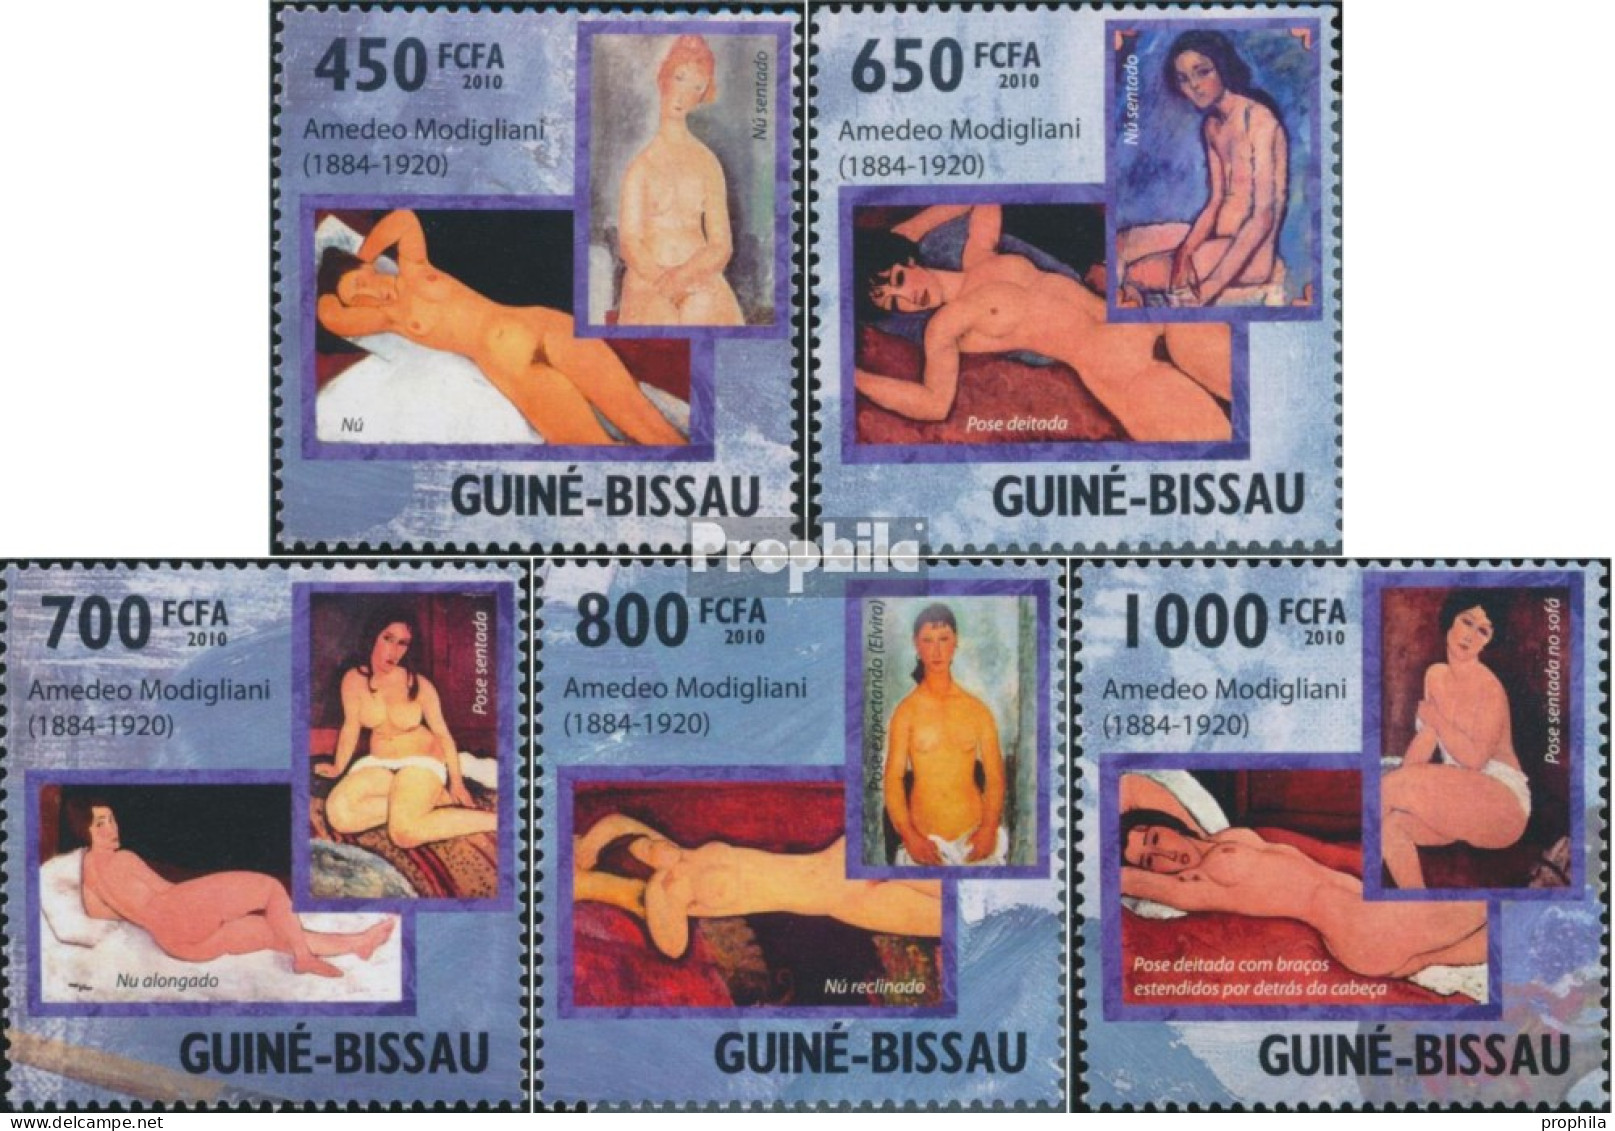 Guinea-Bissau 4605-4609 (kompl. Ausgabe) Postfrisch 2010 Amedeo Modigliani - Guinea-Bissau